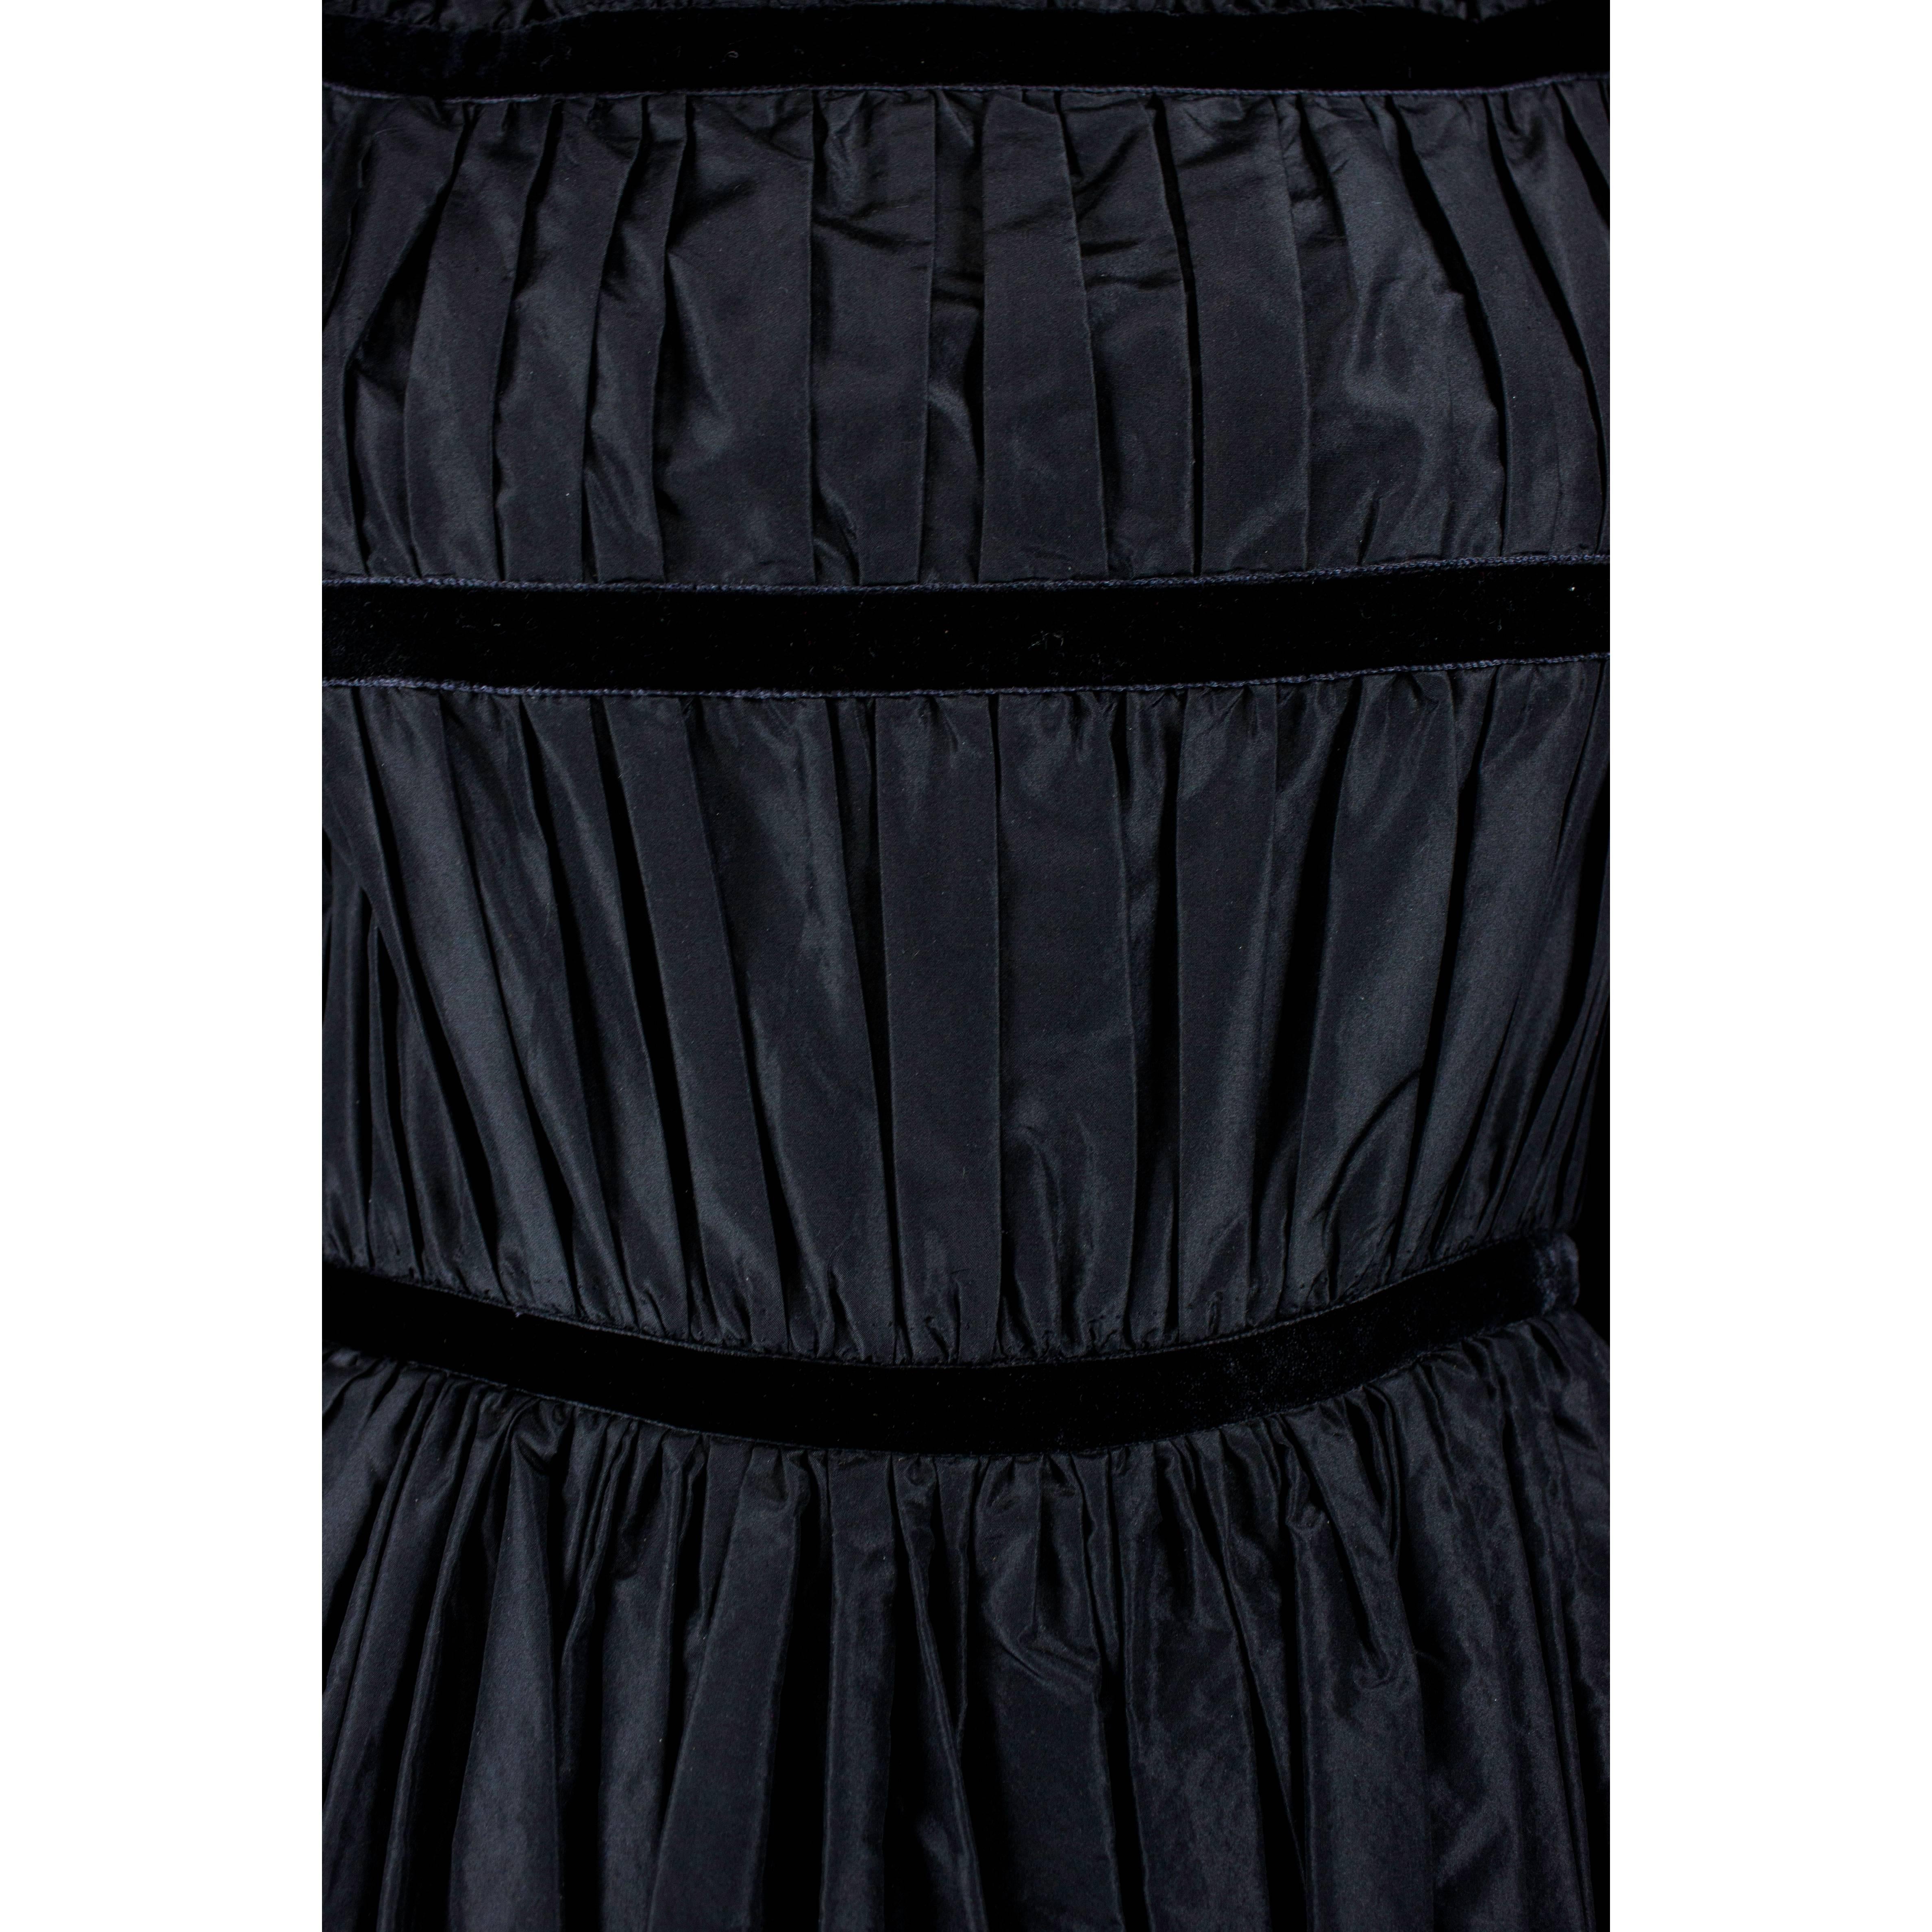 Women's  Louis Feraud couture black taffeta evening gown, Circa 1970